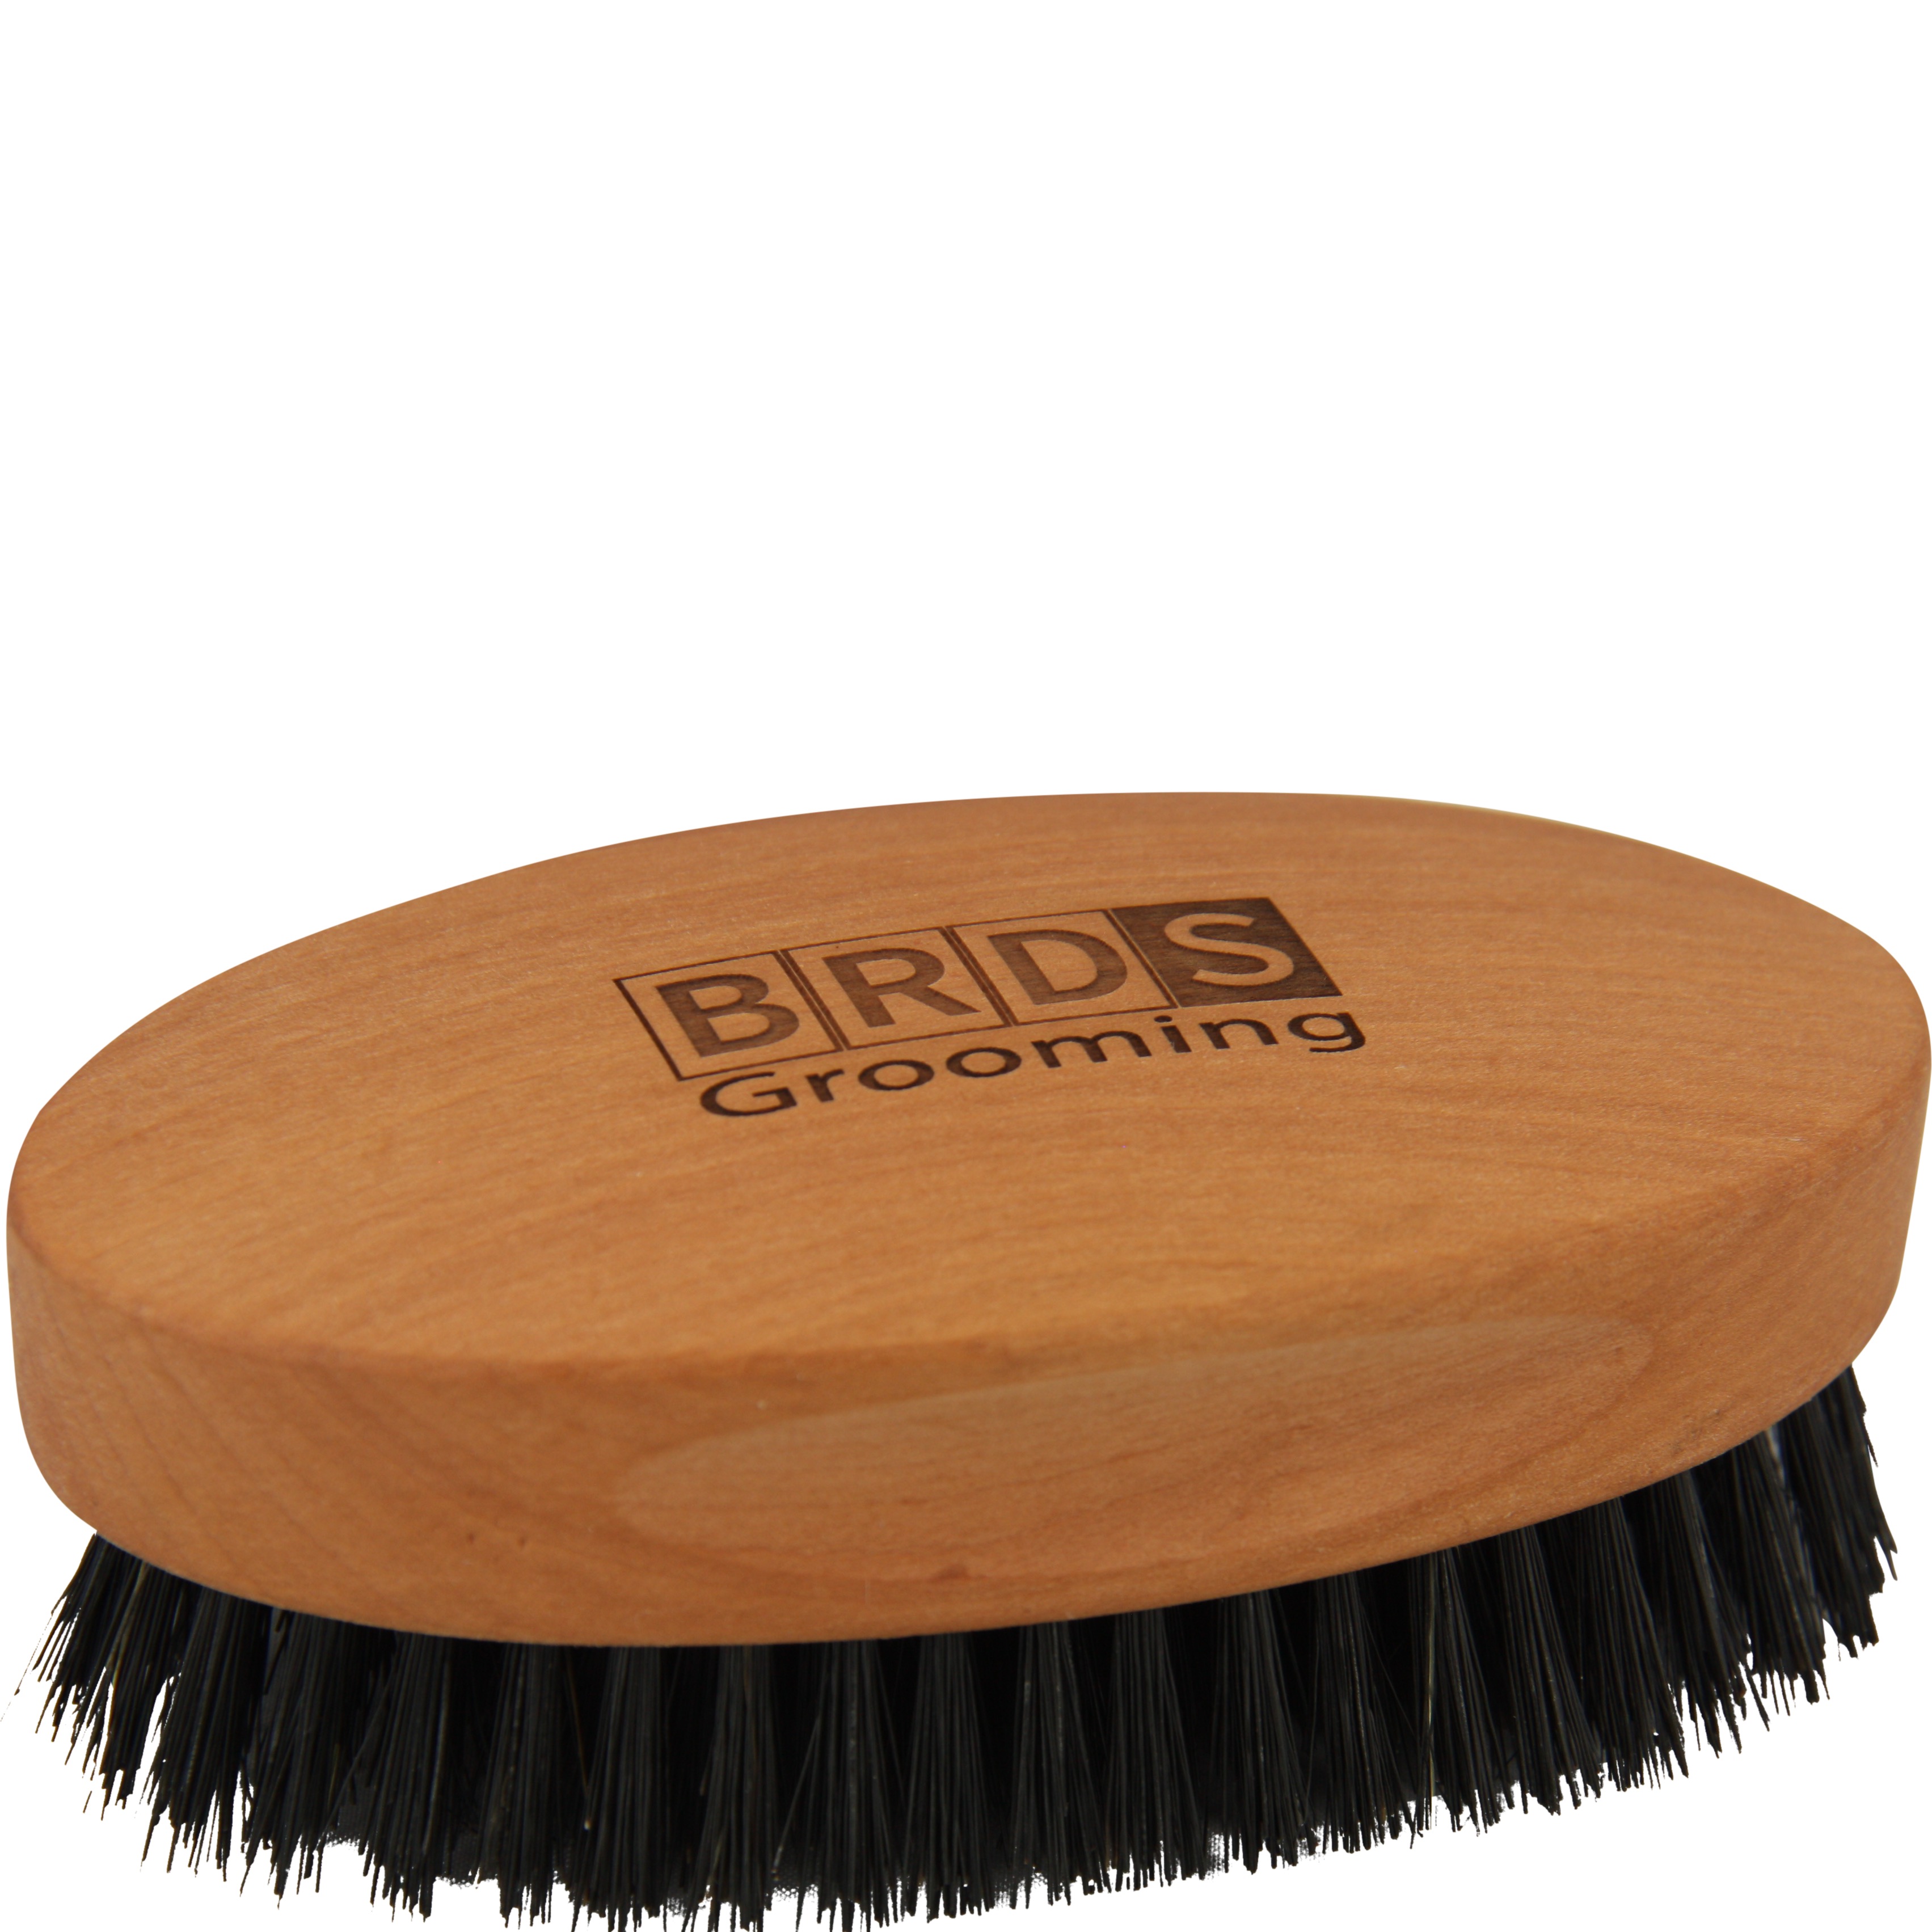 Beards Grooming Baardborstel Military Wildzwijn - 1.1 - BG-05020